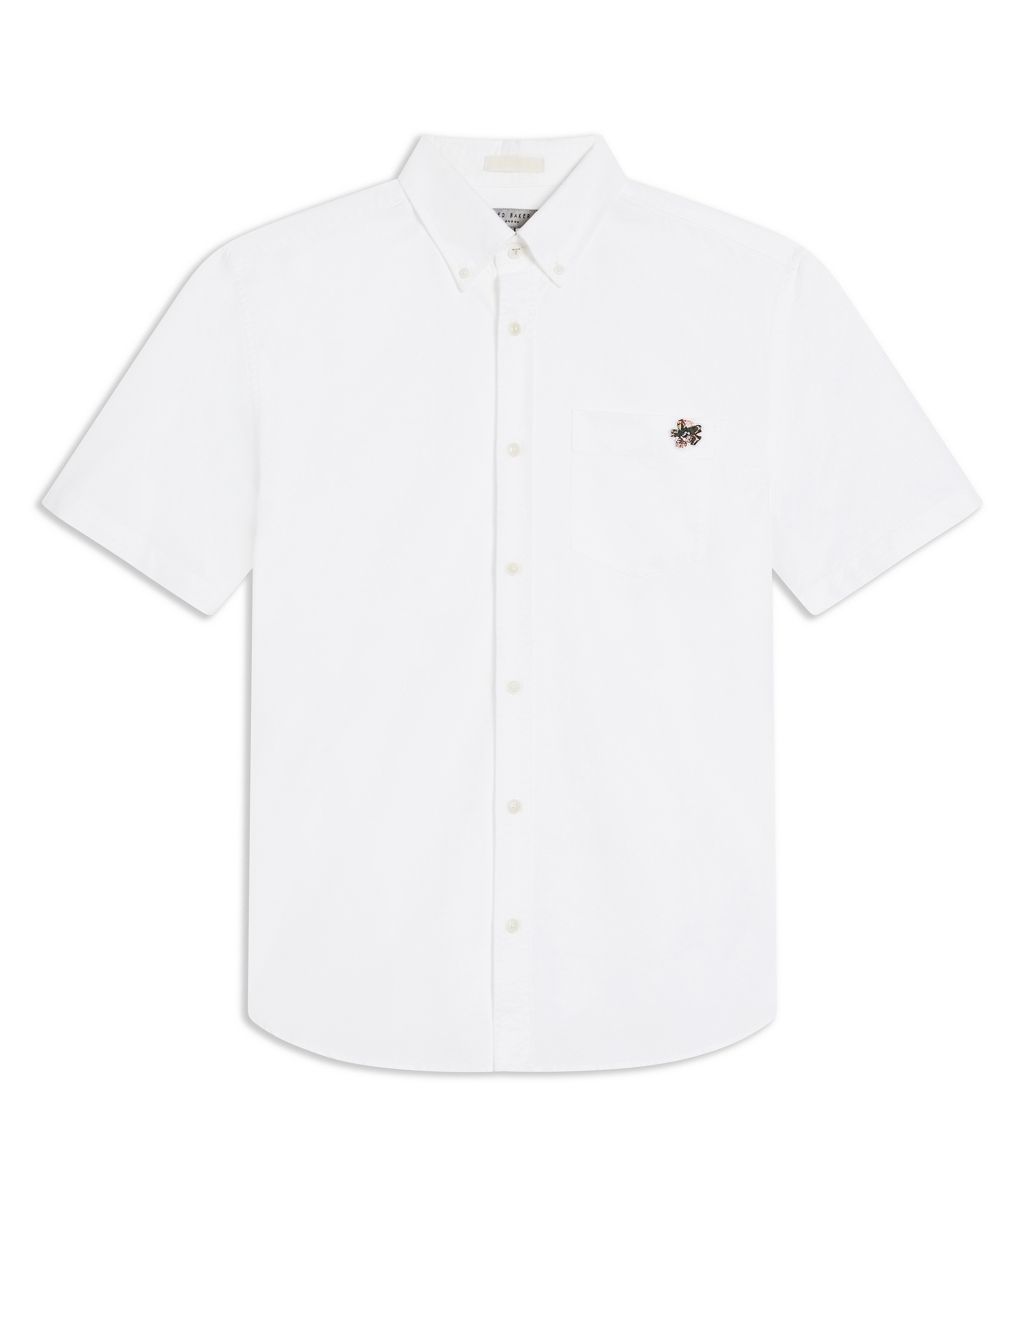 Regular Fit Cotton Rich Oxford Shirt image 1